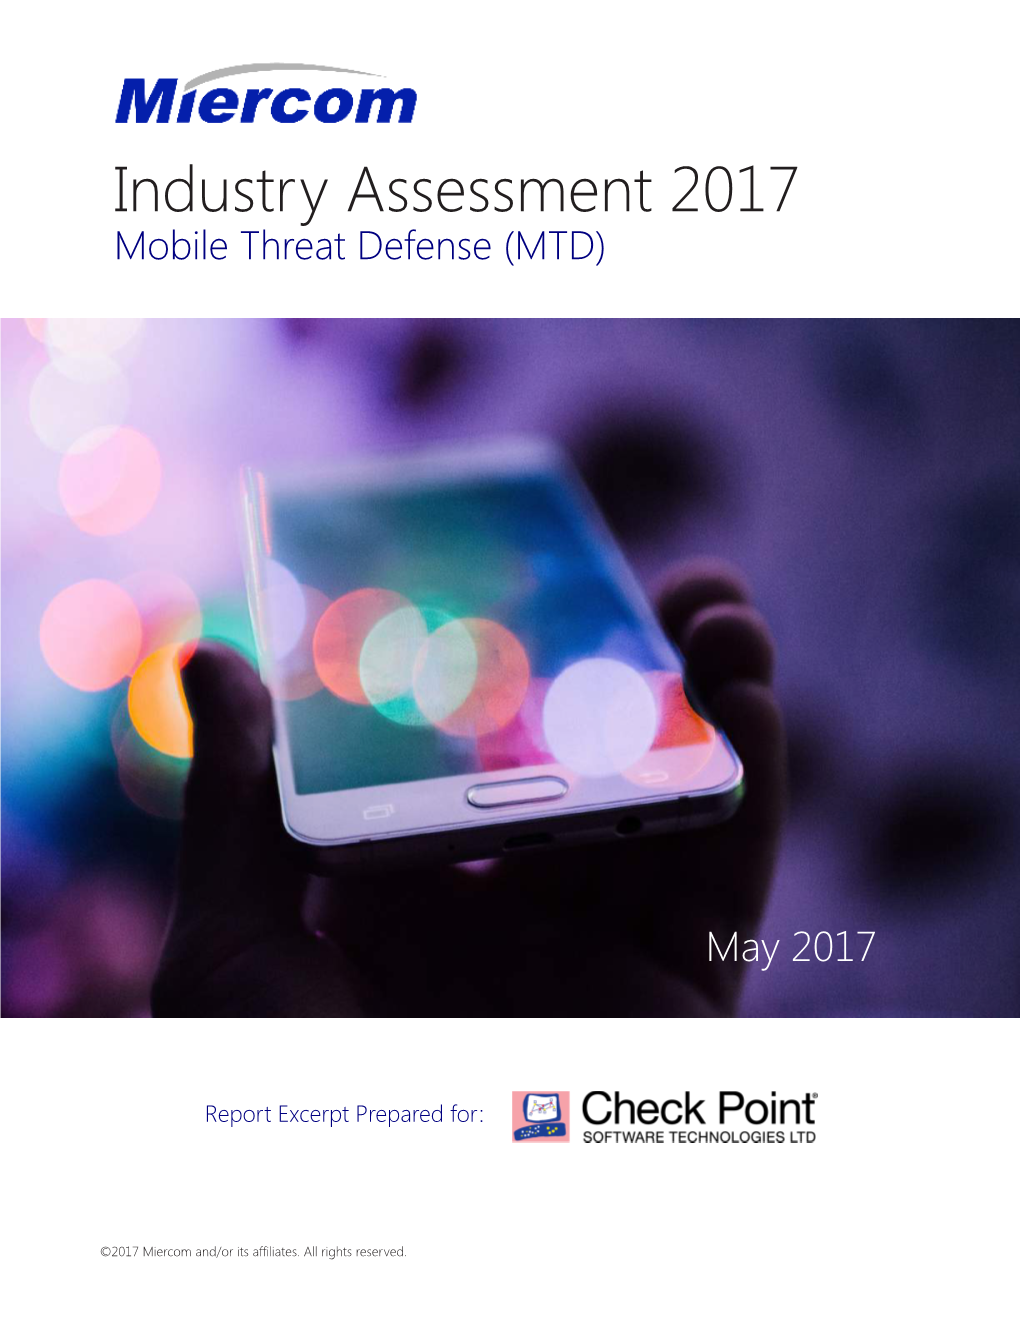 Industry Assessment 2017 Mobile Threat Defense (MTD)